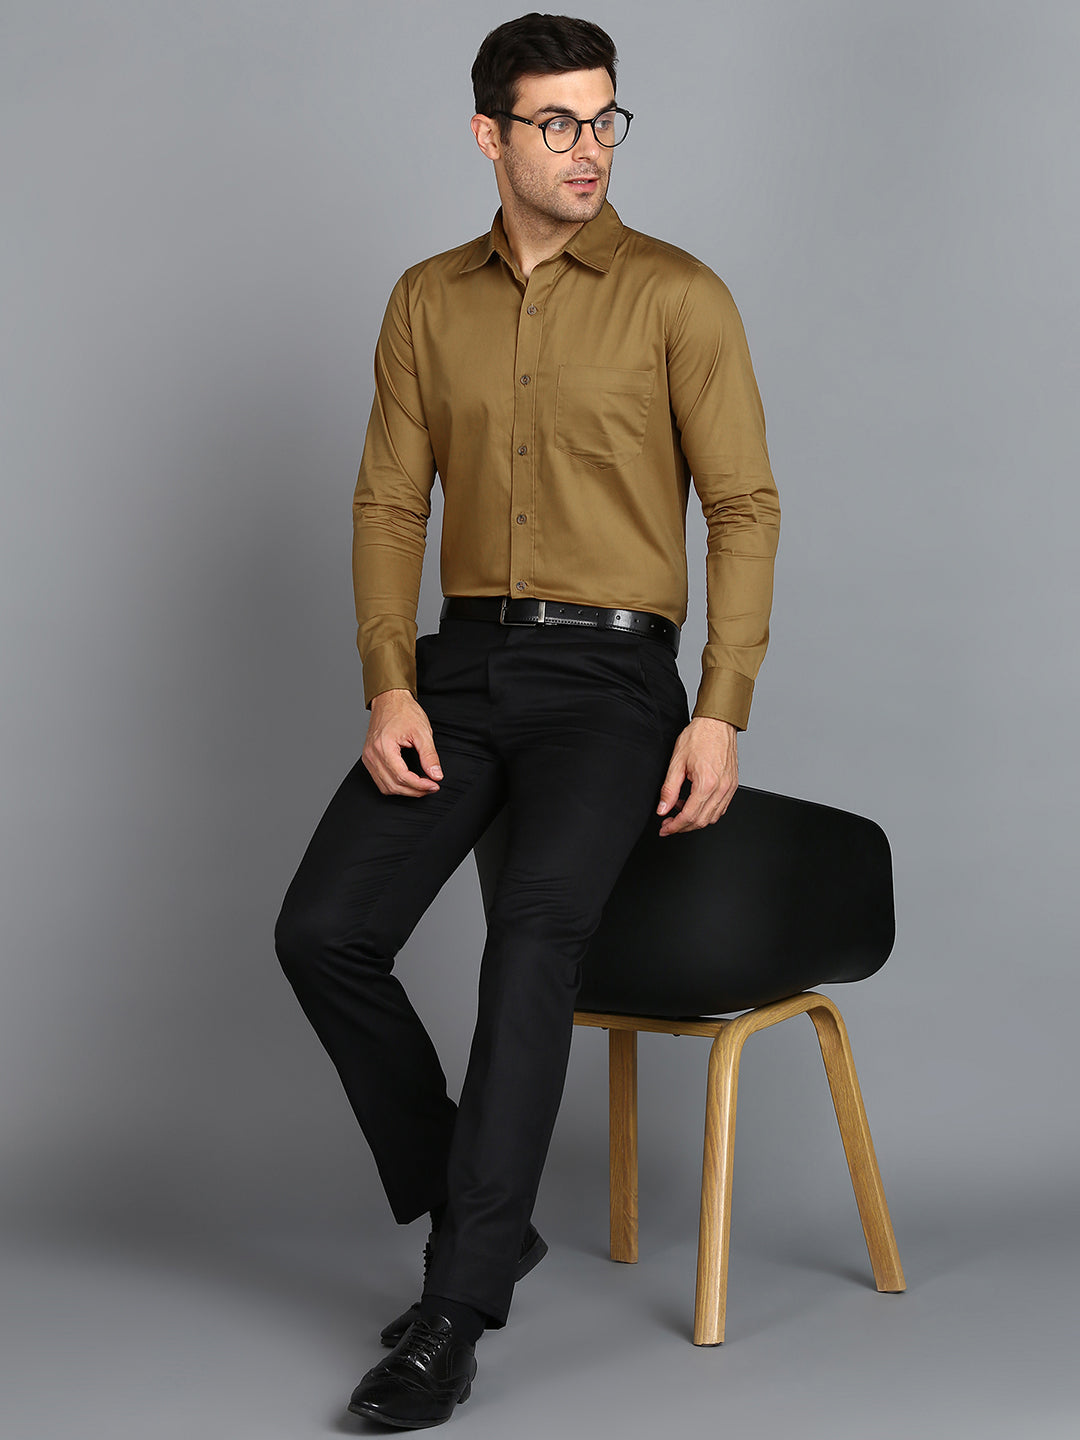 Which colour pants match black shirts? - Quora